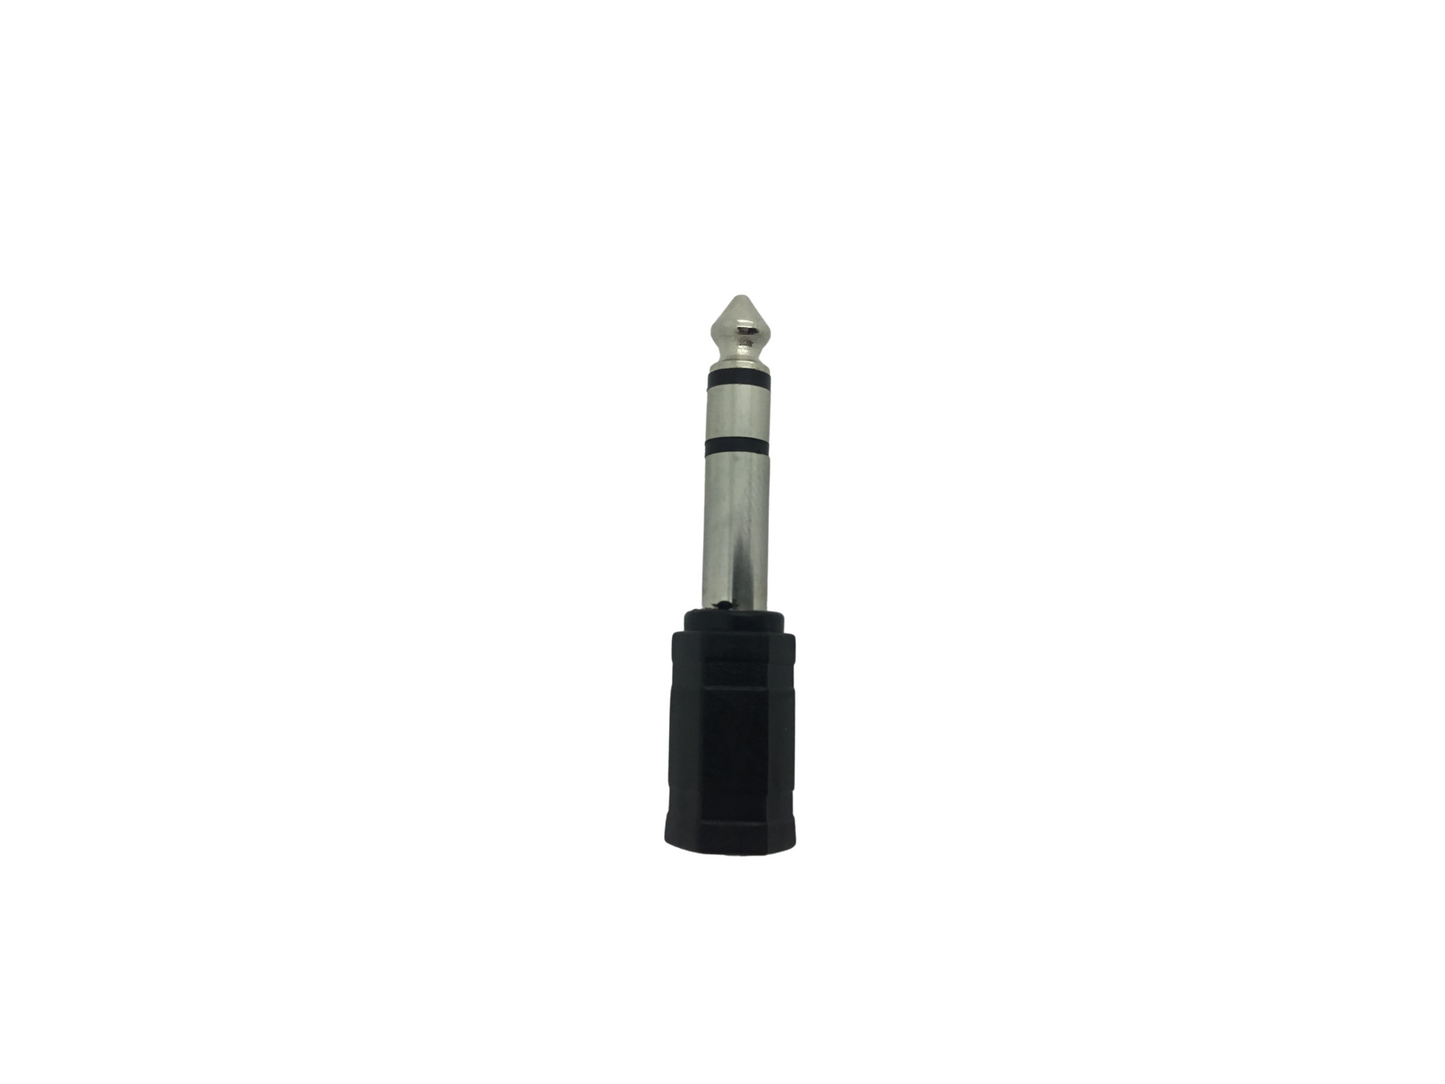 6.35mm 3 Pole Stereo Jack Plug to 3.5mm Stereo Socket Adaptor - Black